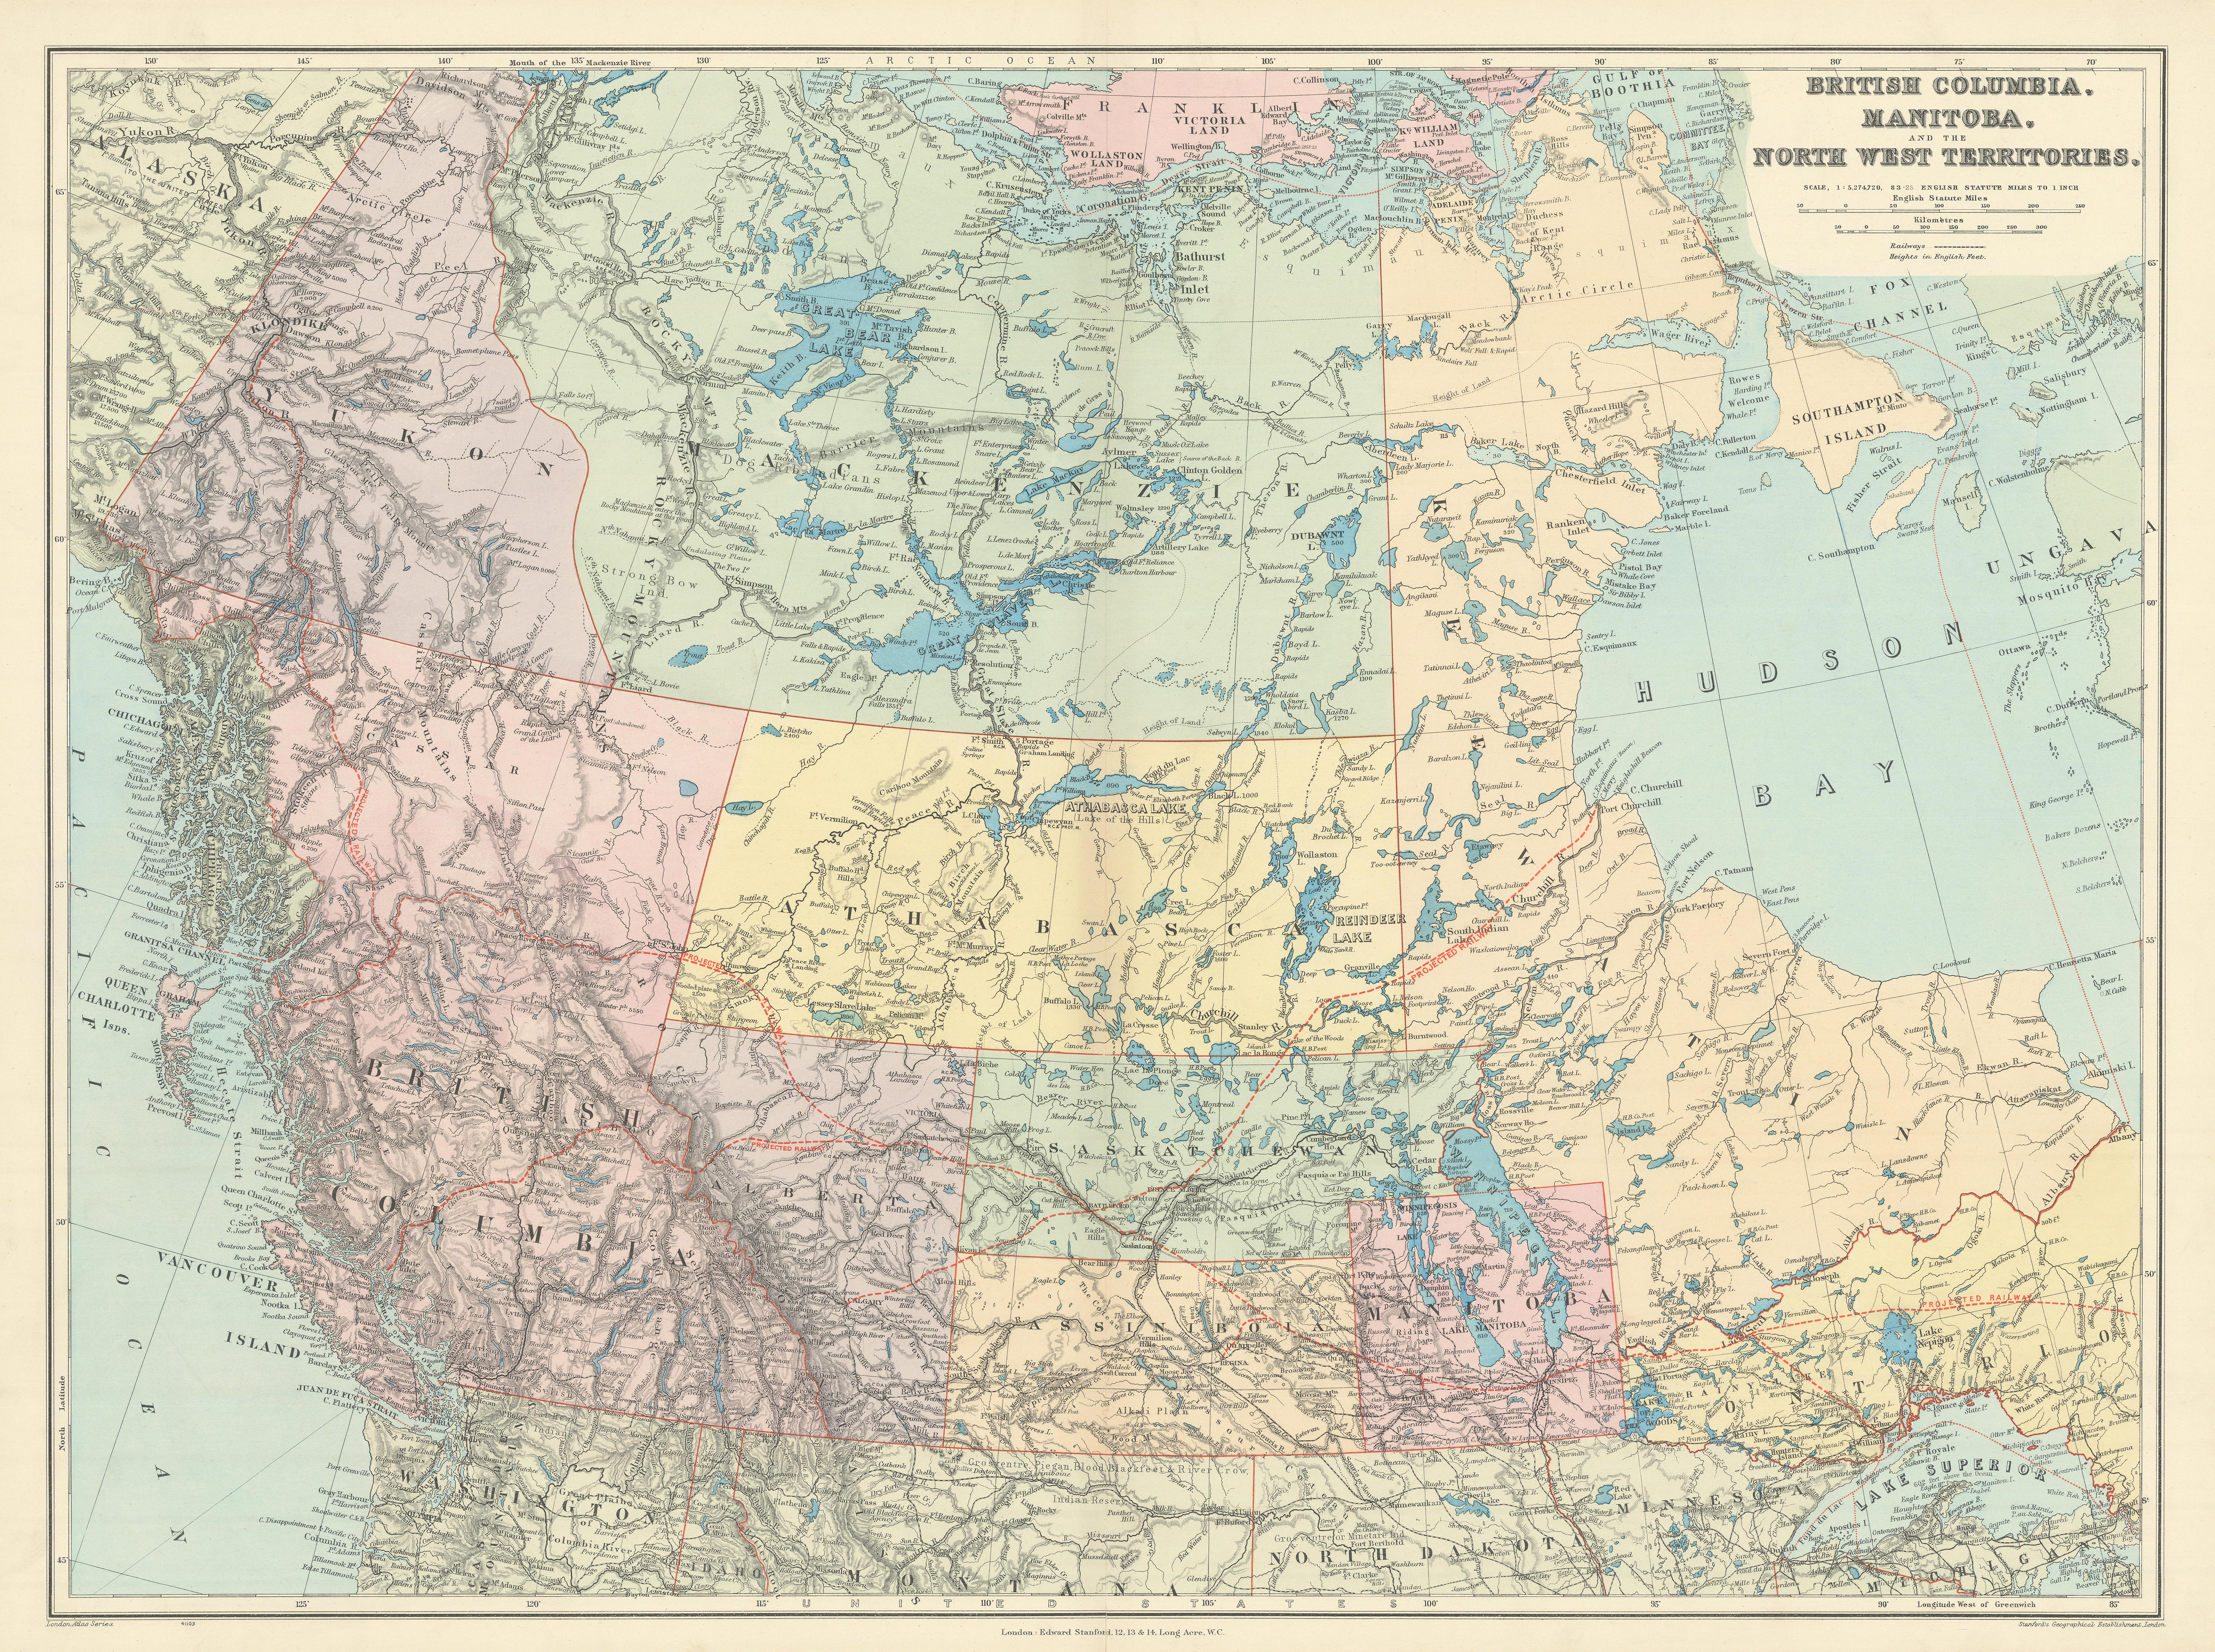 British Columbia & Northwest Territory. Manitoba Canada. STANFORD 1904 old map